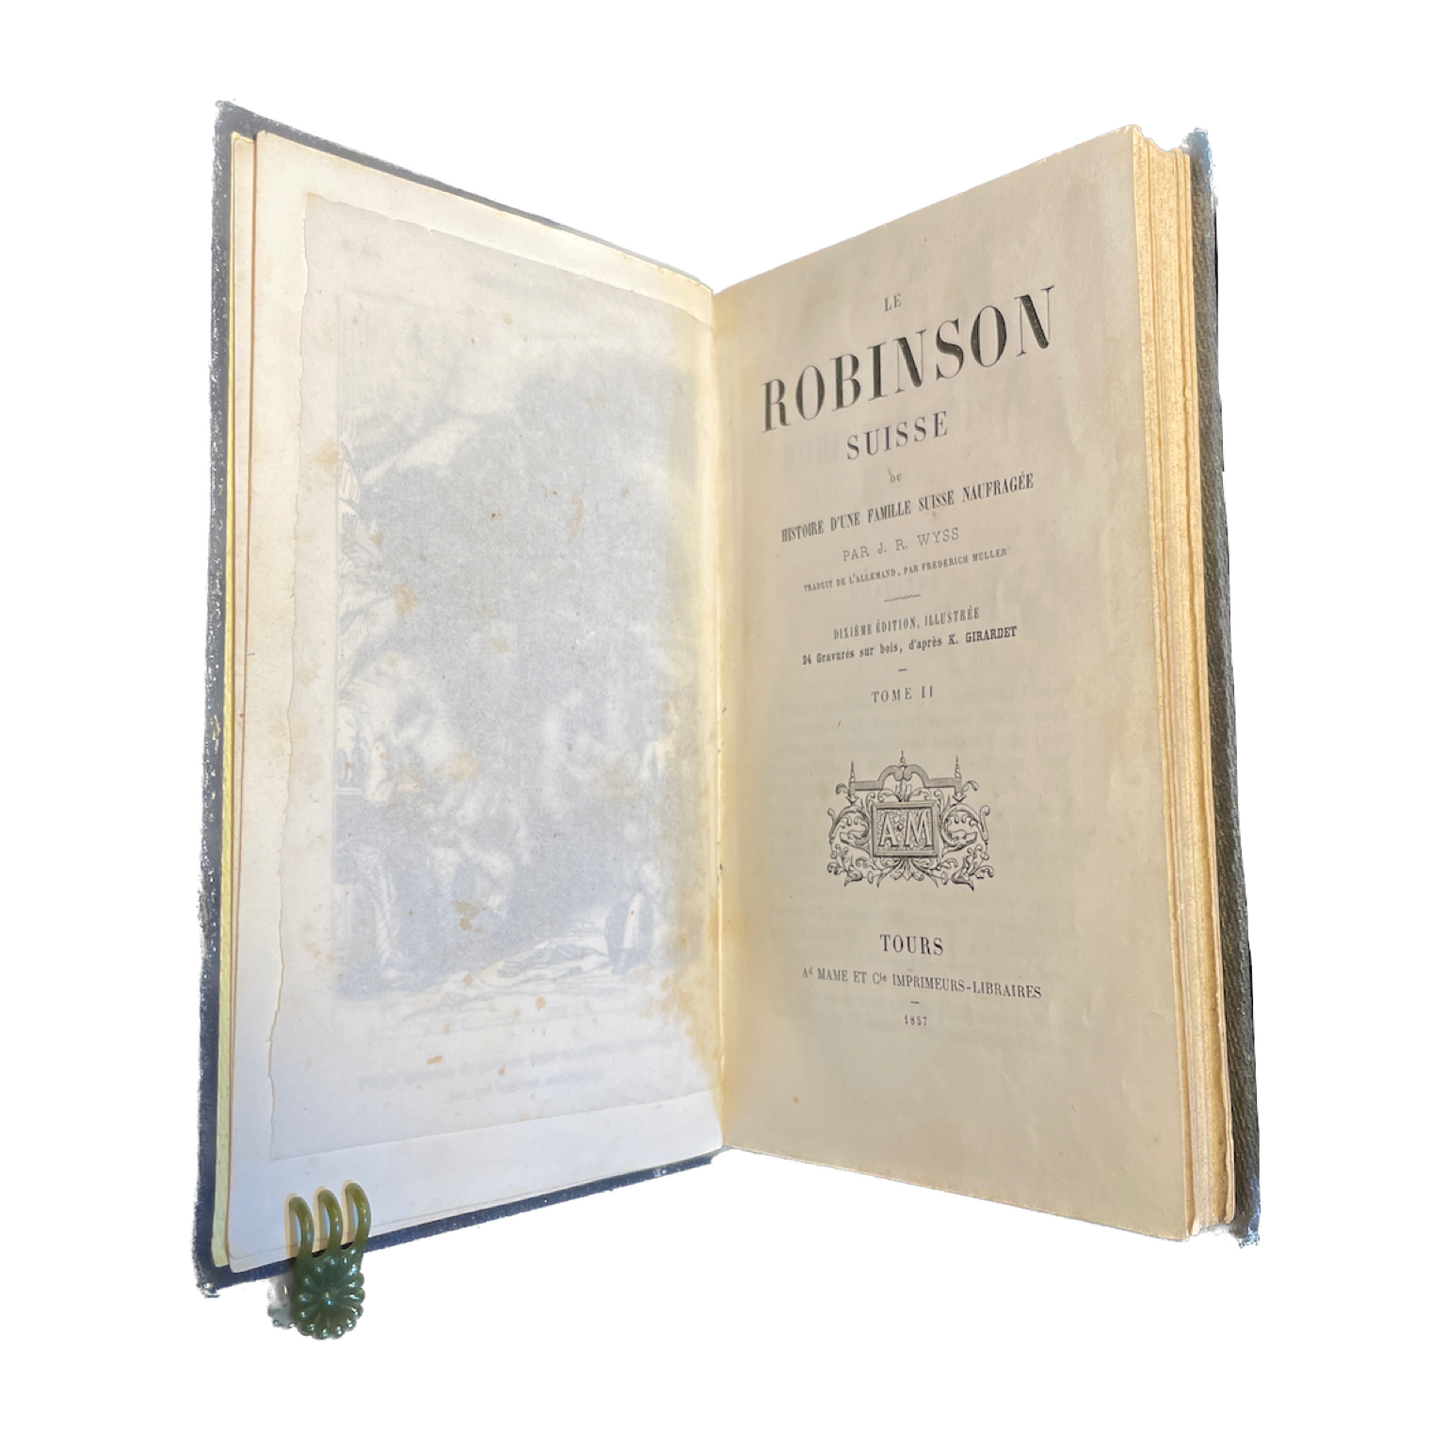 1857 - J.R. Wyss - Le robinson suisse